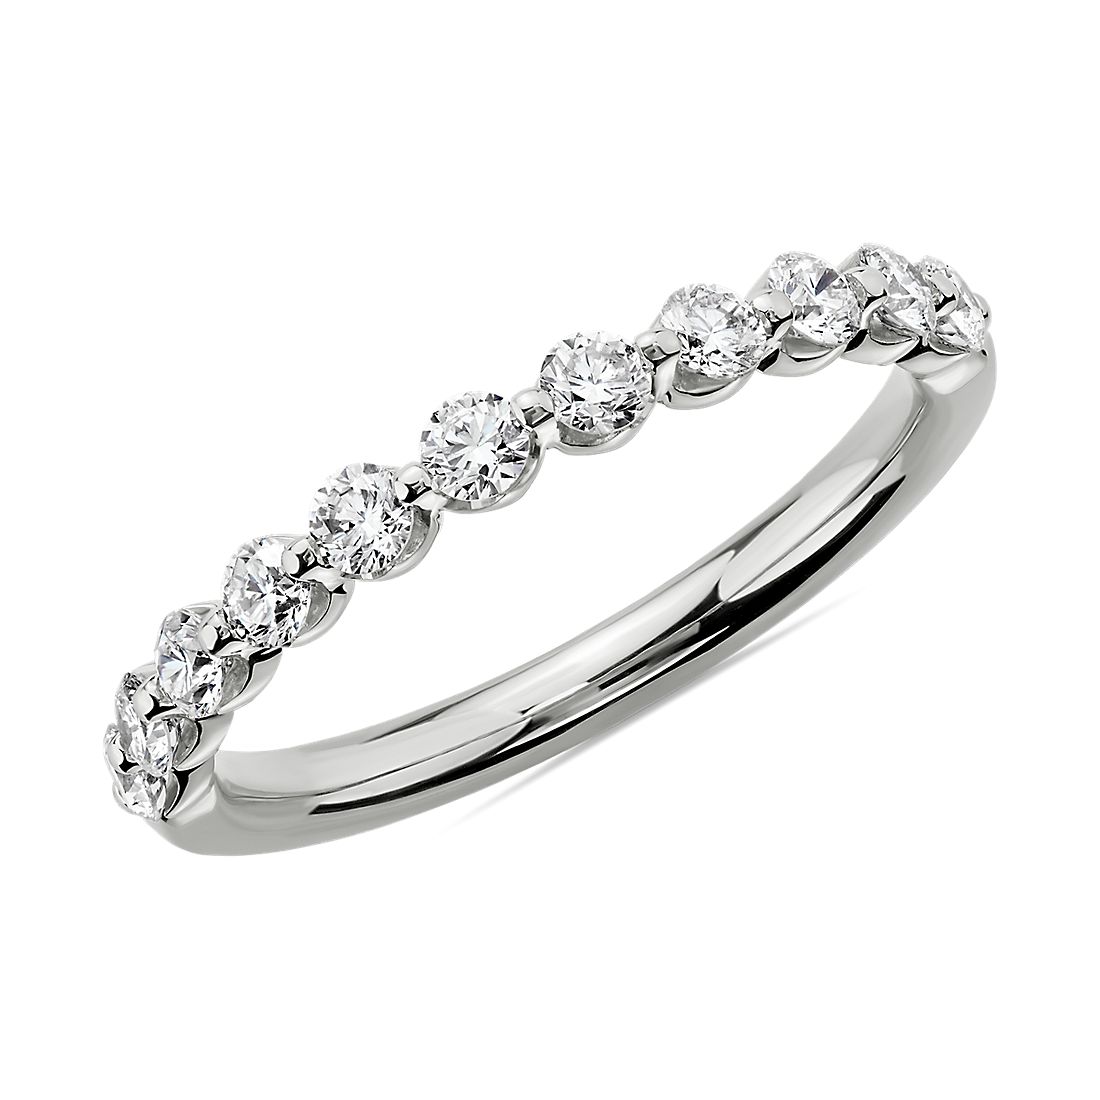 Floating Diamond Wedding Ring in Platinum (1/2 ct. tw.)